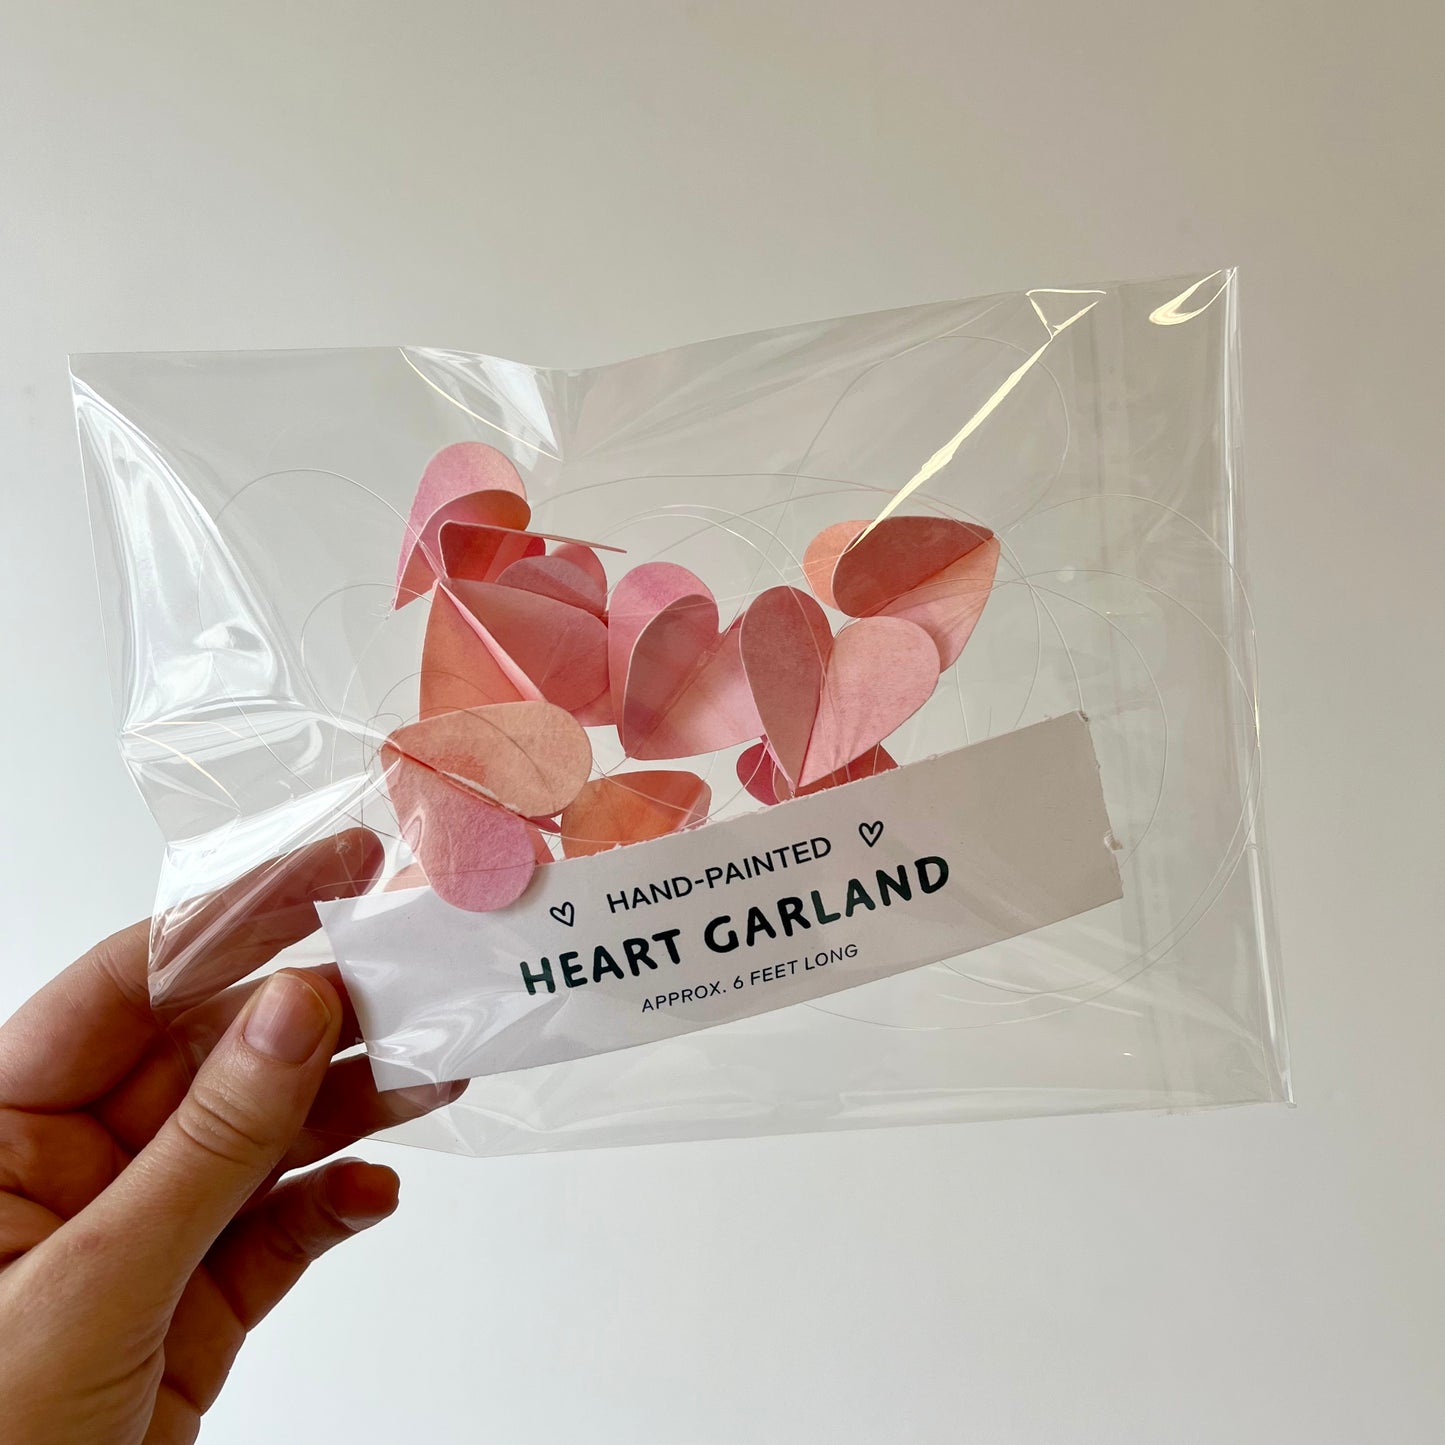 Hand-painted Heart Garland